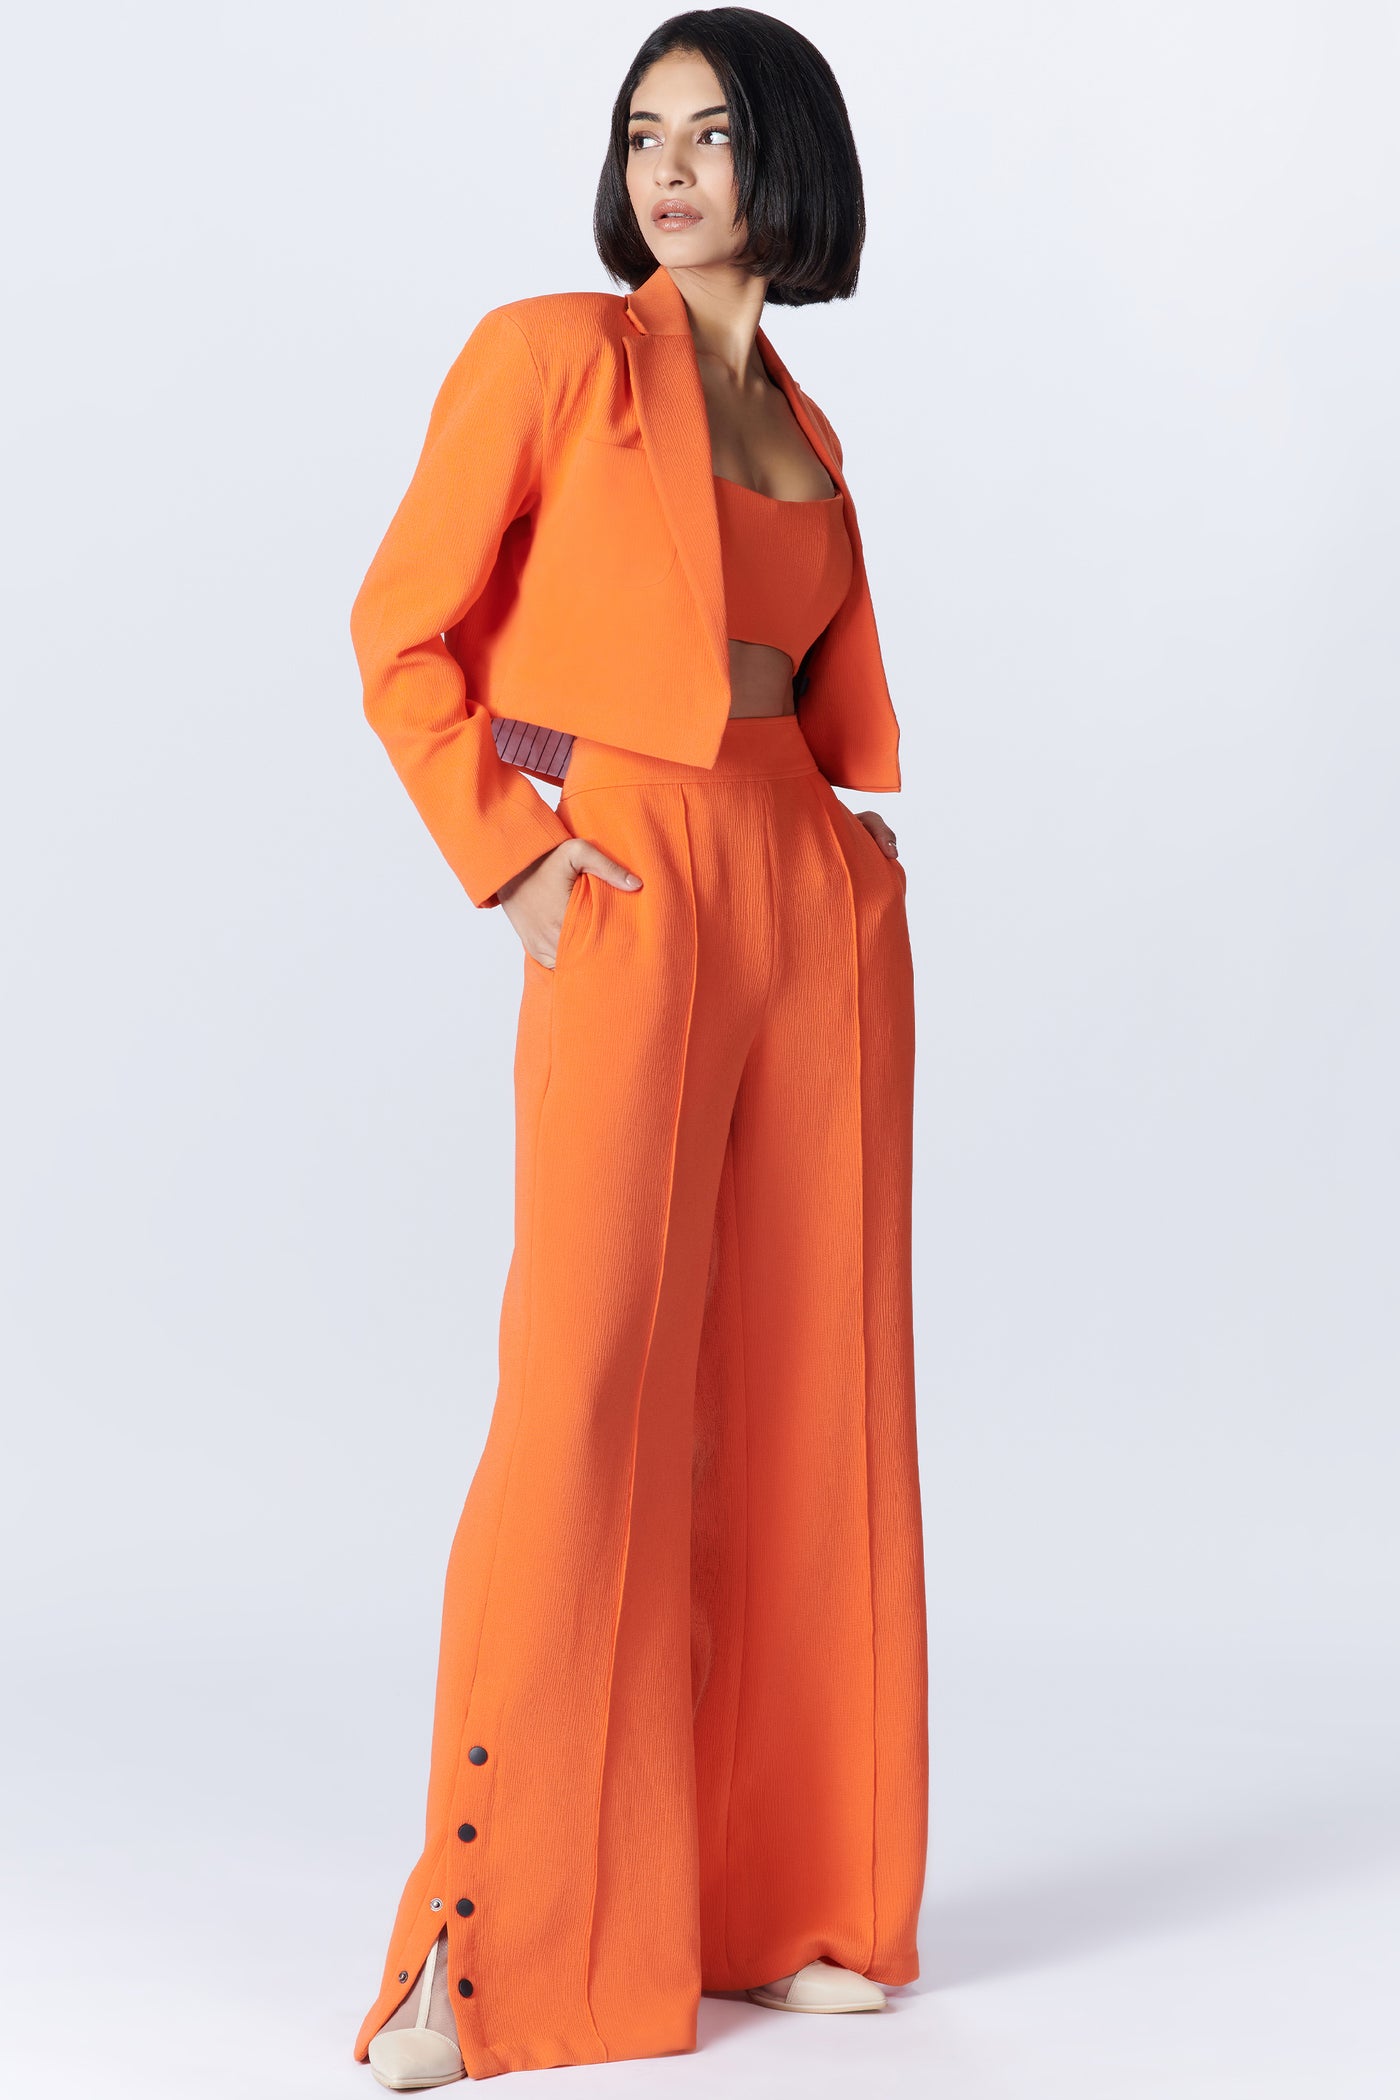 SN By Shantanu NikhilSNCC Orange Flared Trousers indian designer wear online shopping melange singapore